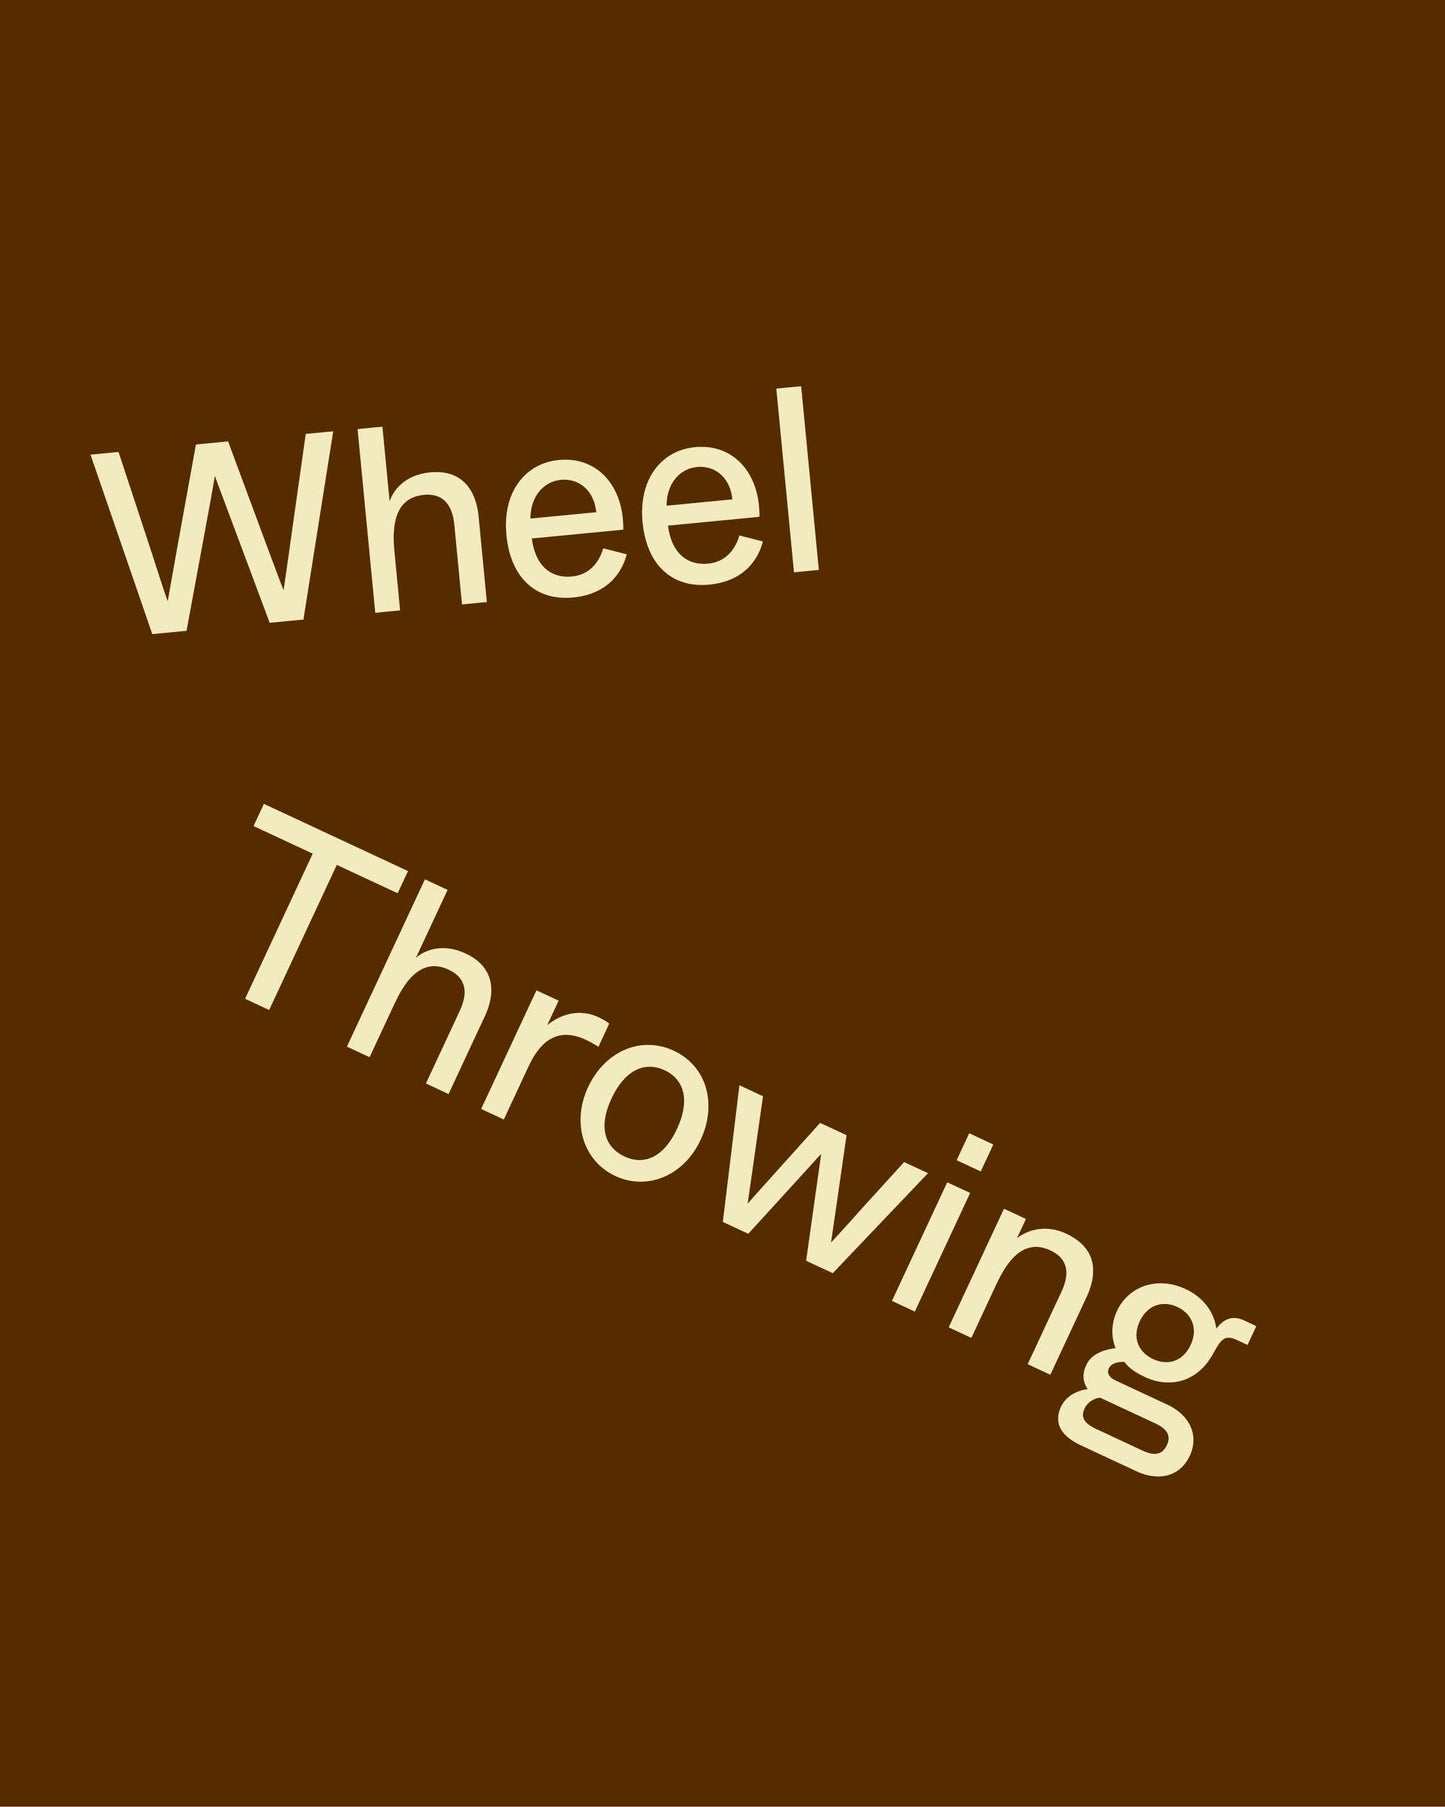 Wheel Throwing 1 hour